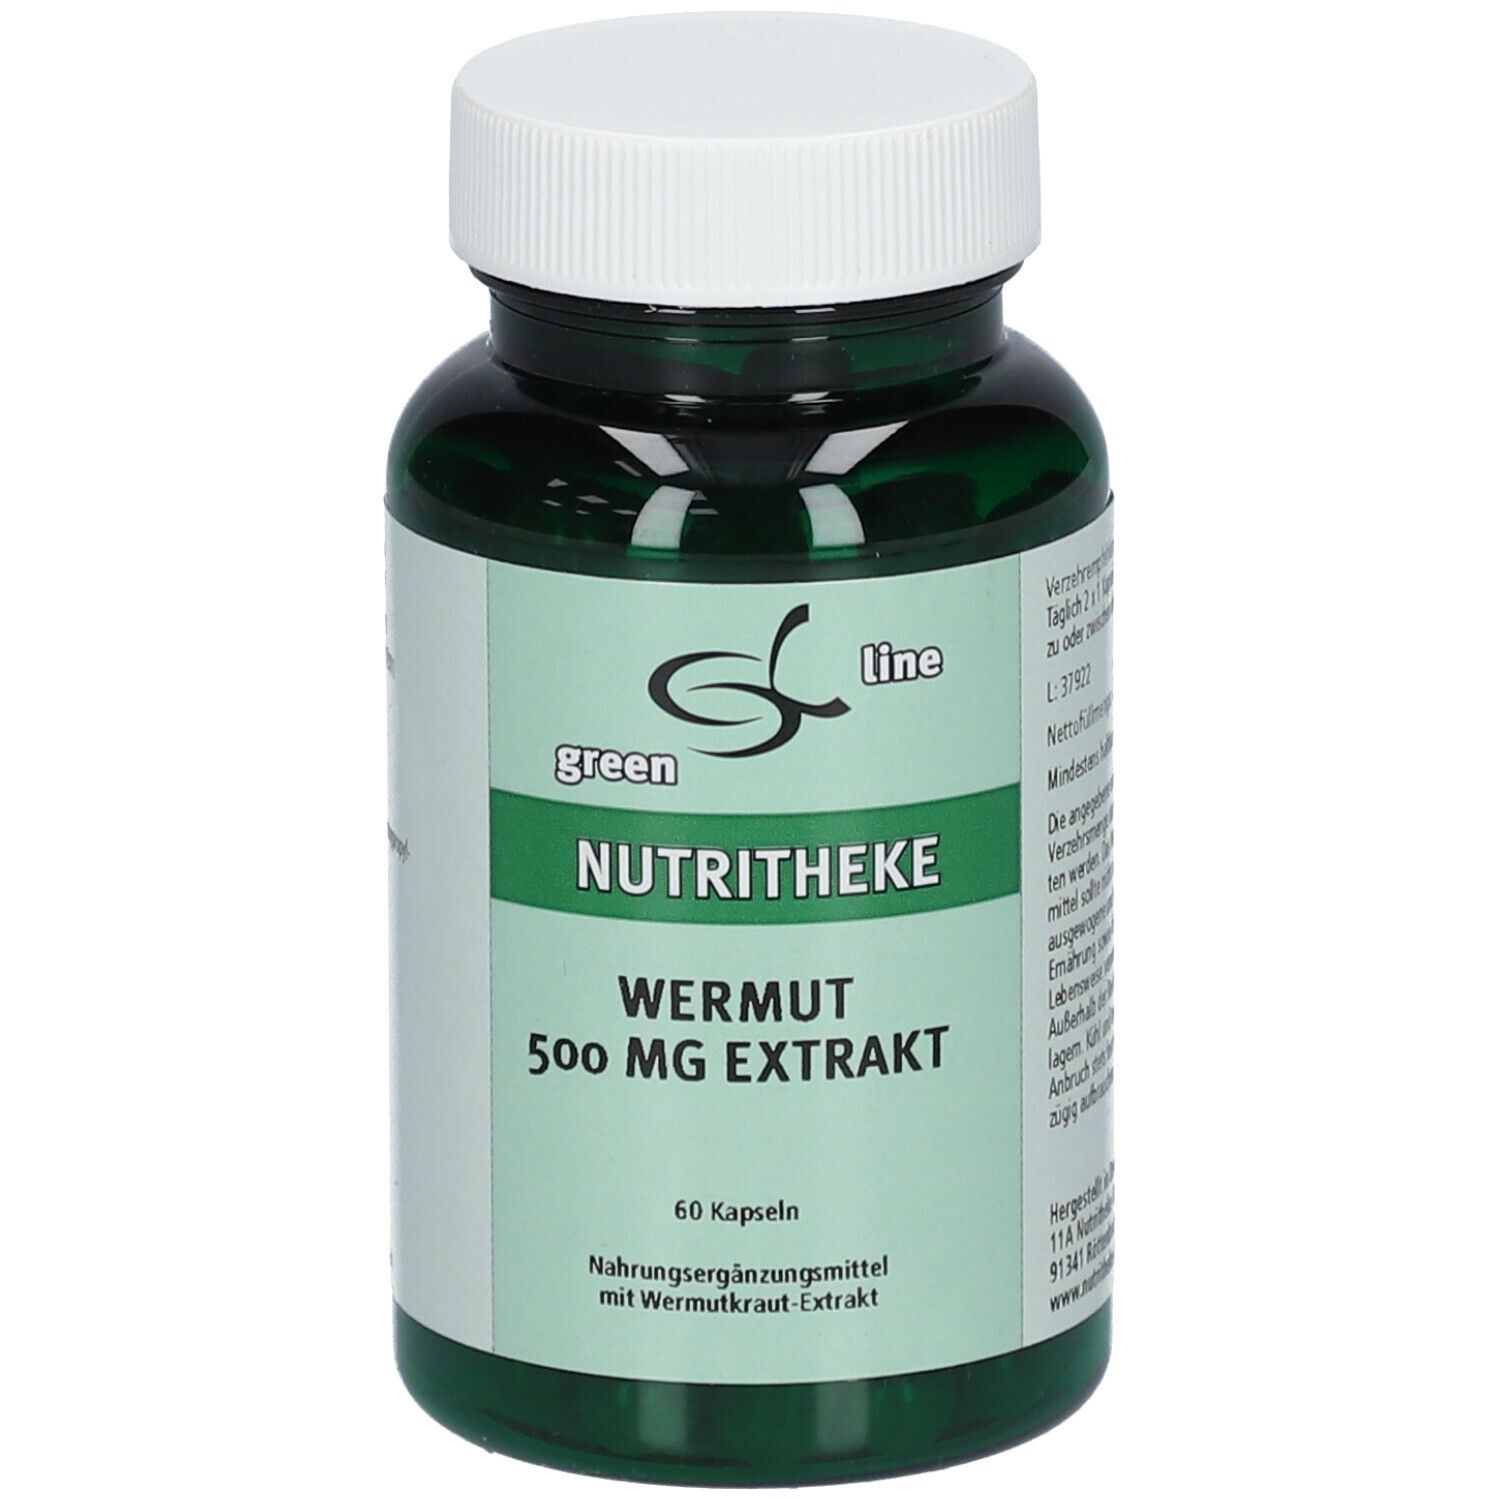 green line Wermut 500 mg Extrakt